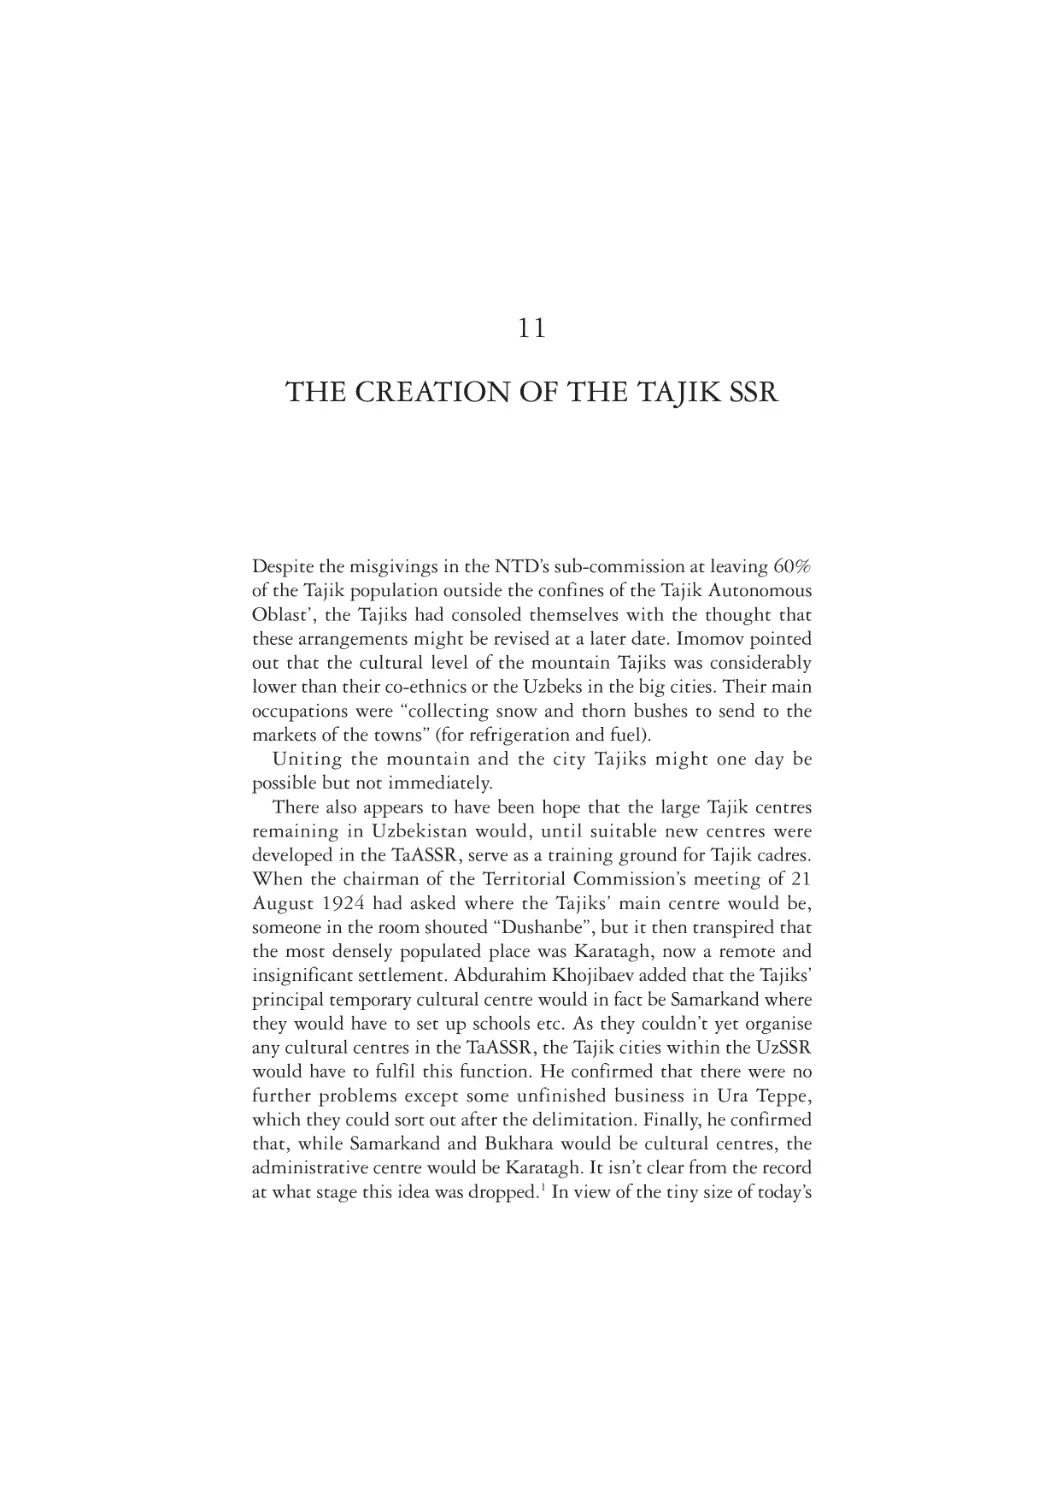 11. The Creation of the Tajik SSR